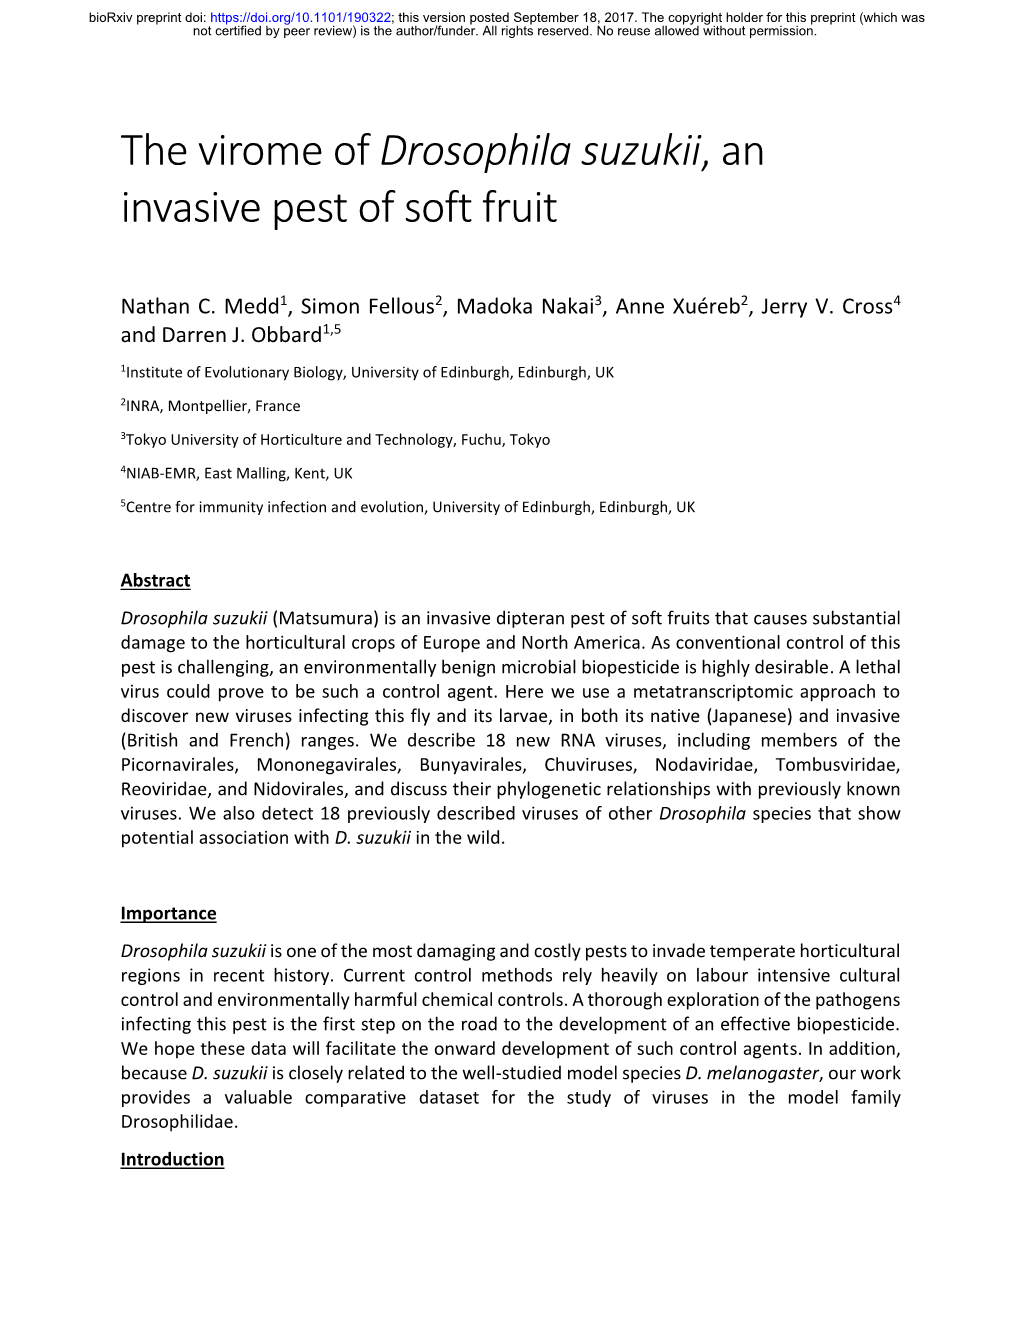 Drosophila Suzukii, an Invasive Pest of Soft Fruit